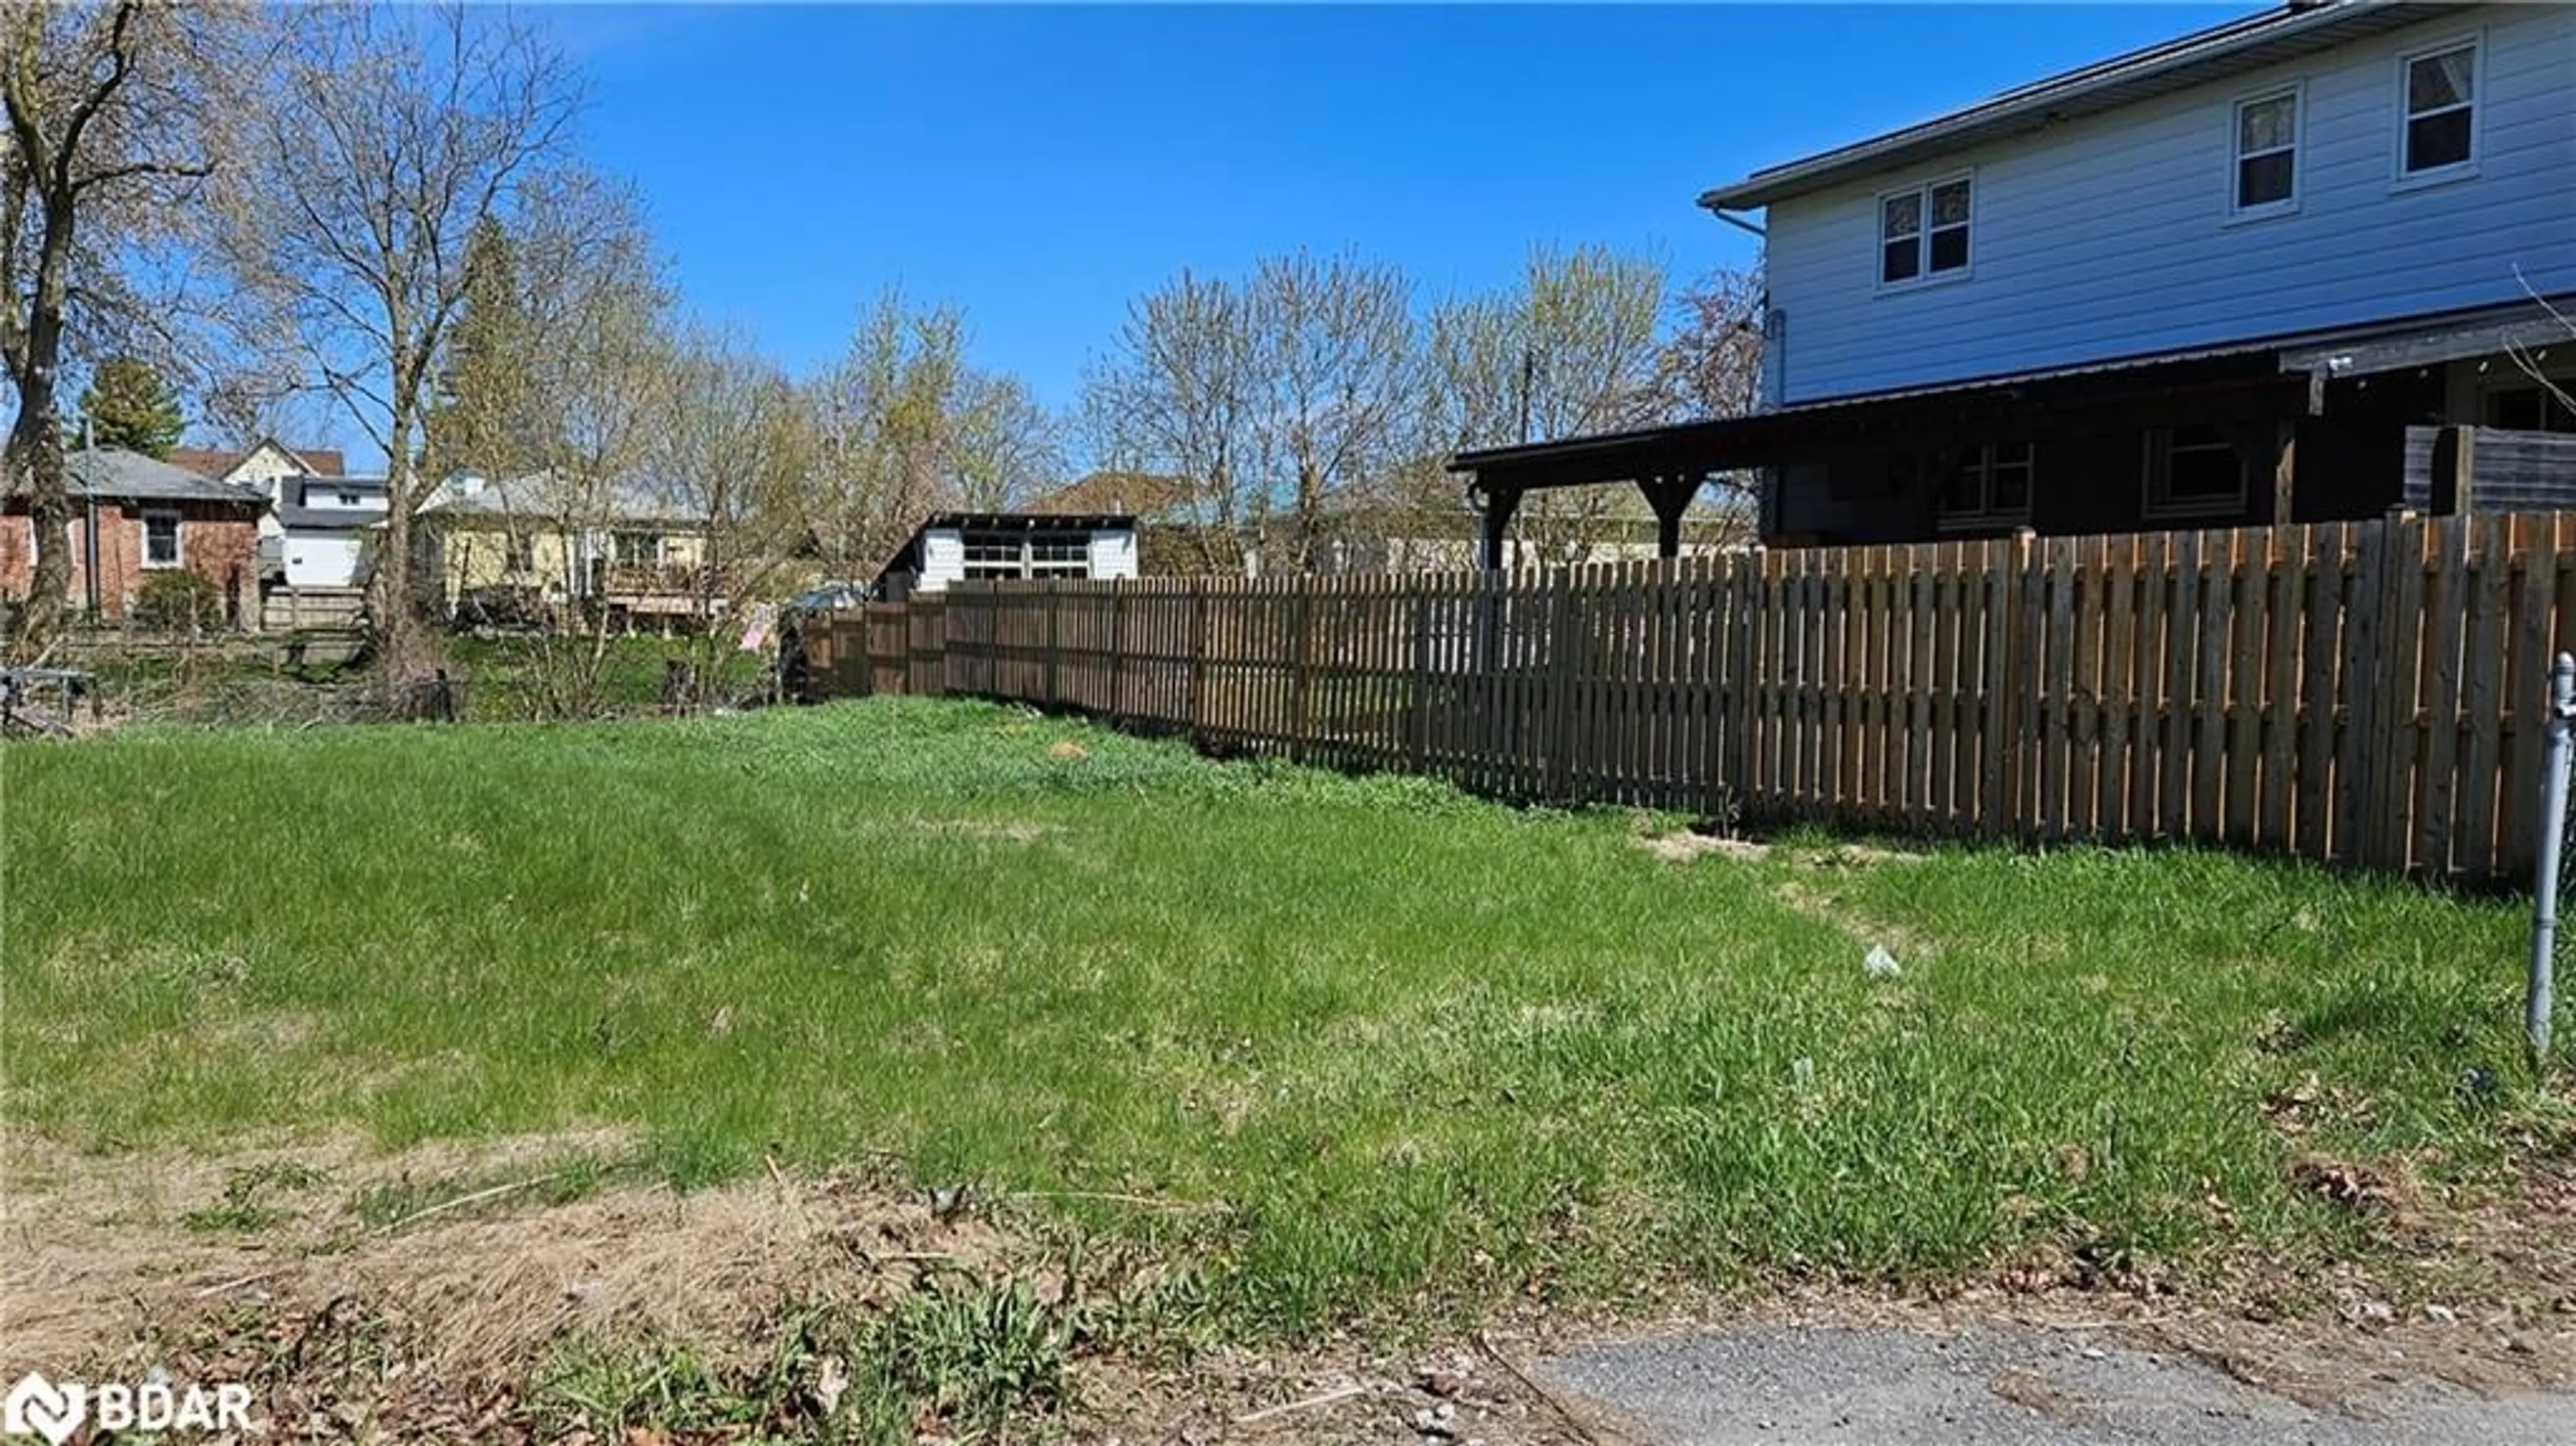 Fenced yard for 2 Panelas Cres, Quinte West Ontario K8V 6A4